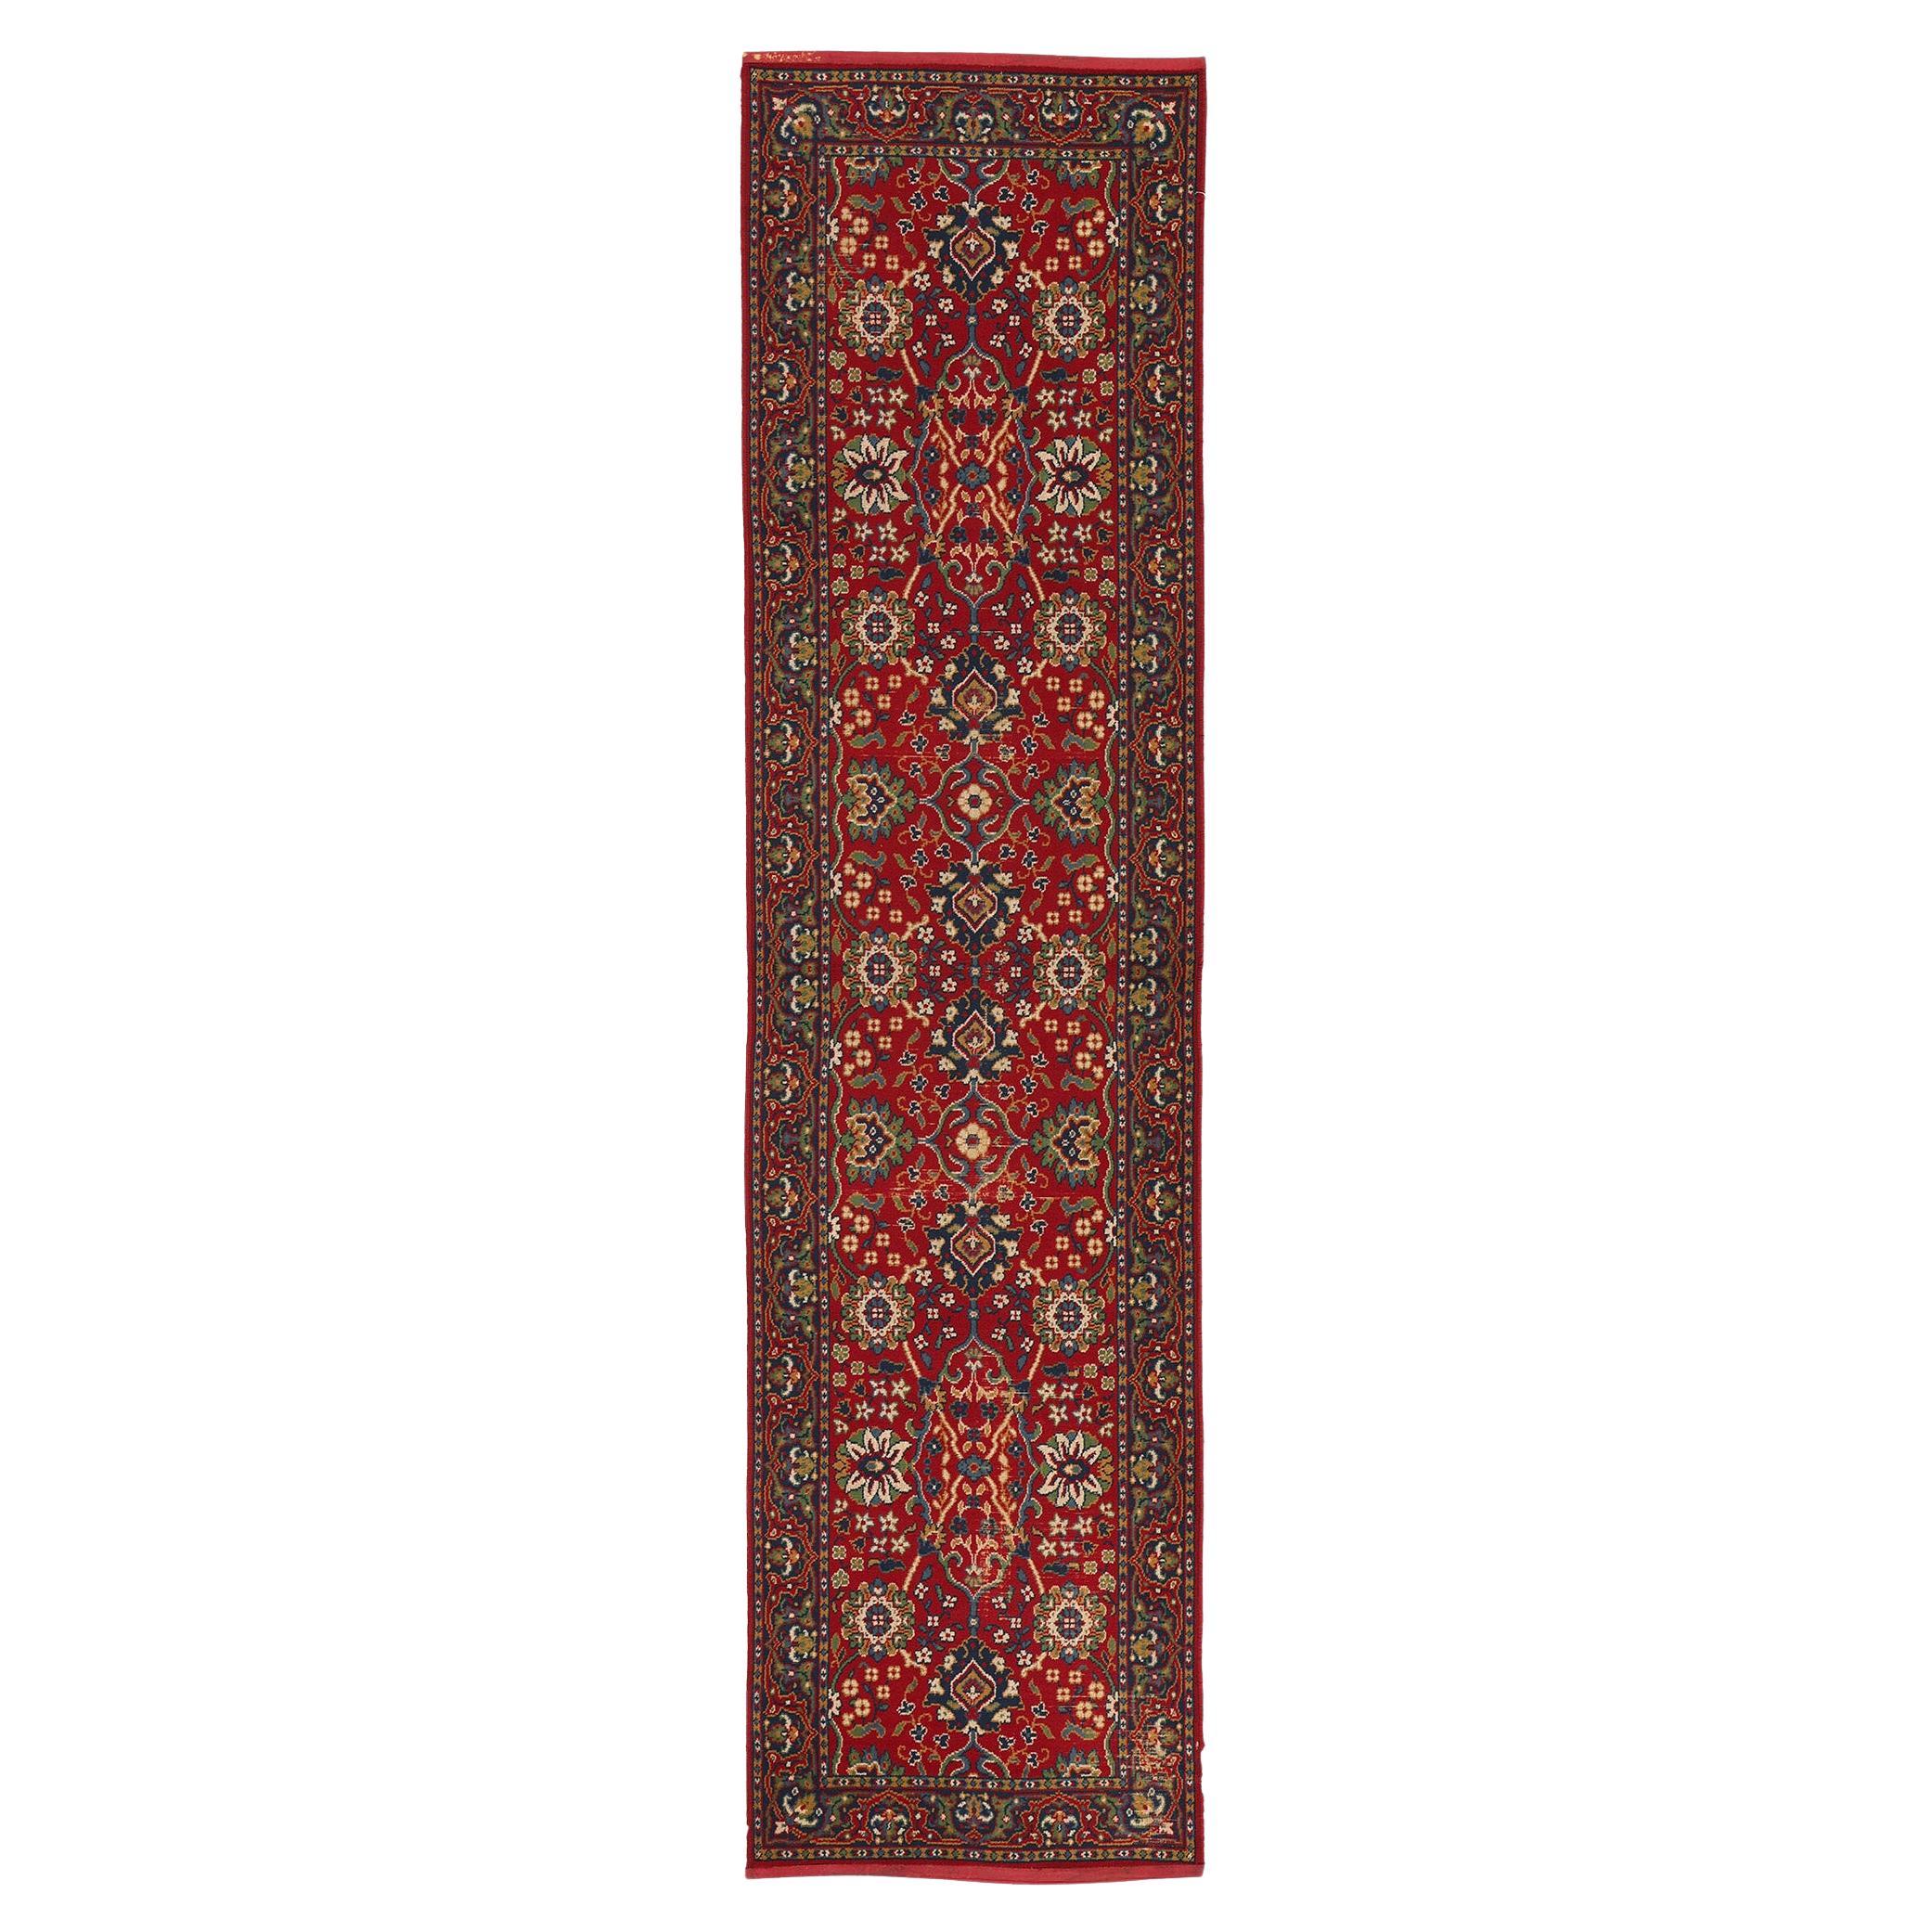 Antique European Persian Floral Rug